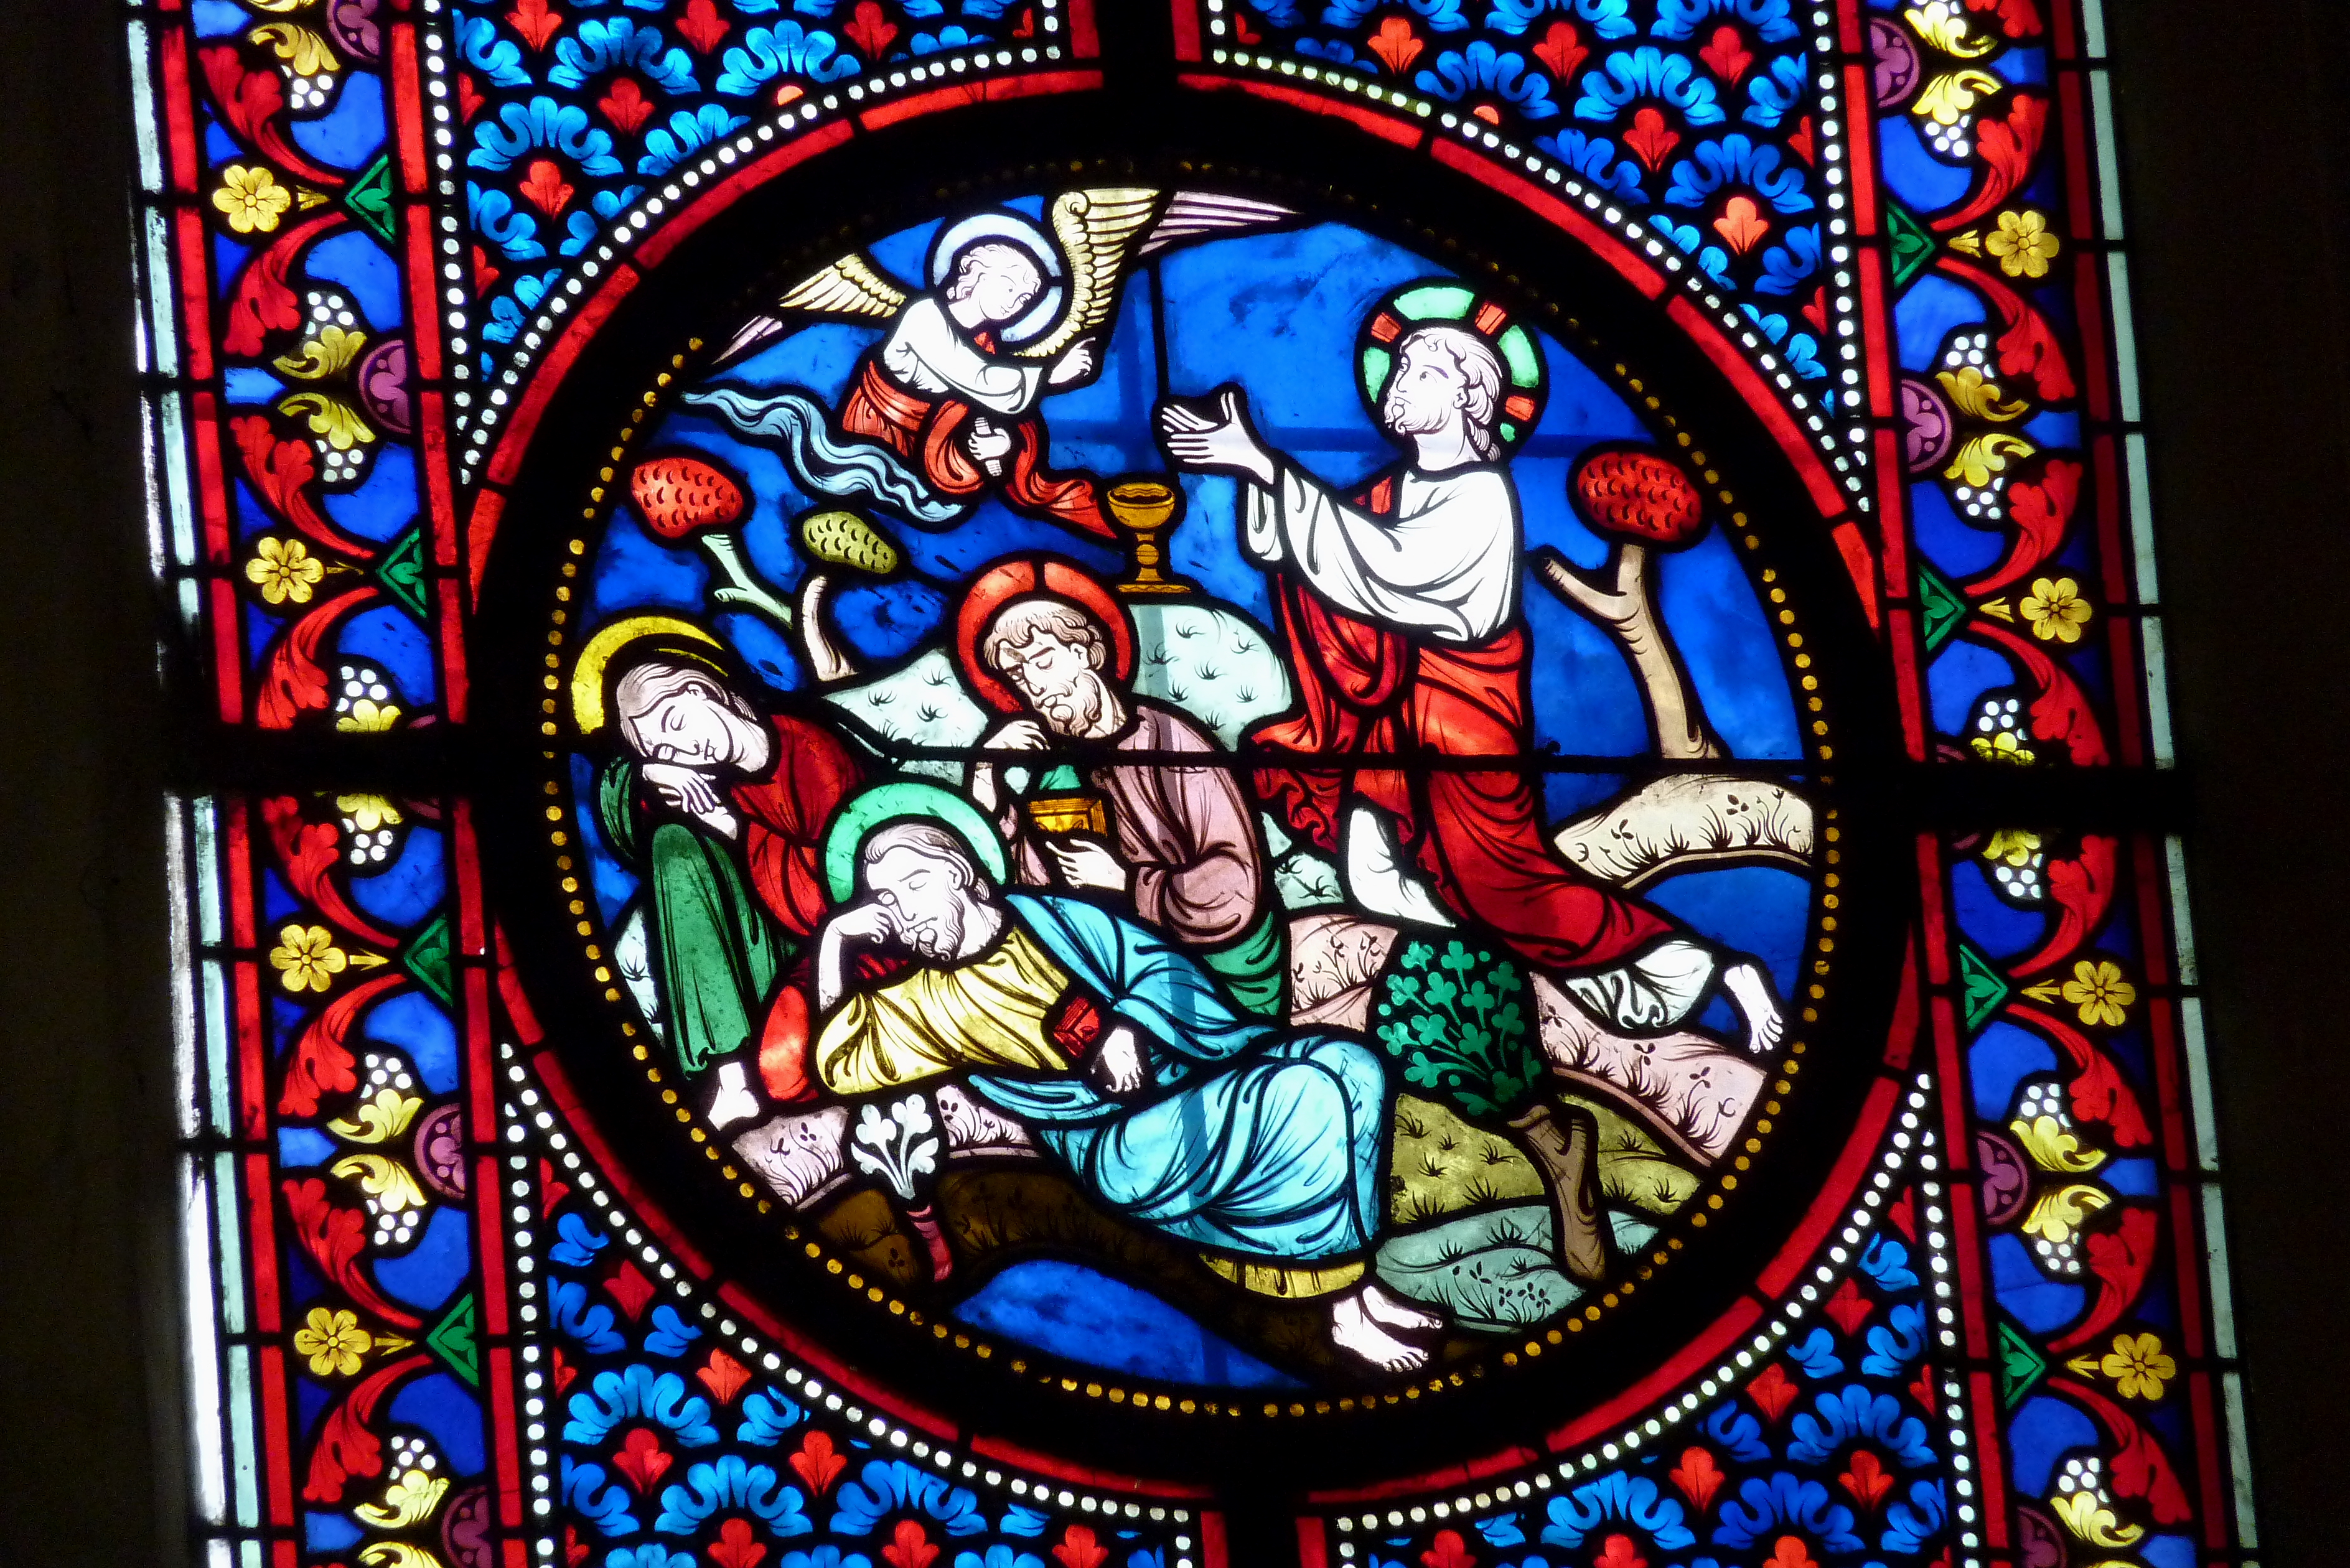 Taverny Notre-Dame vitrail 655